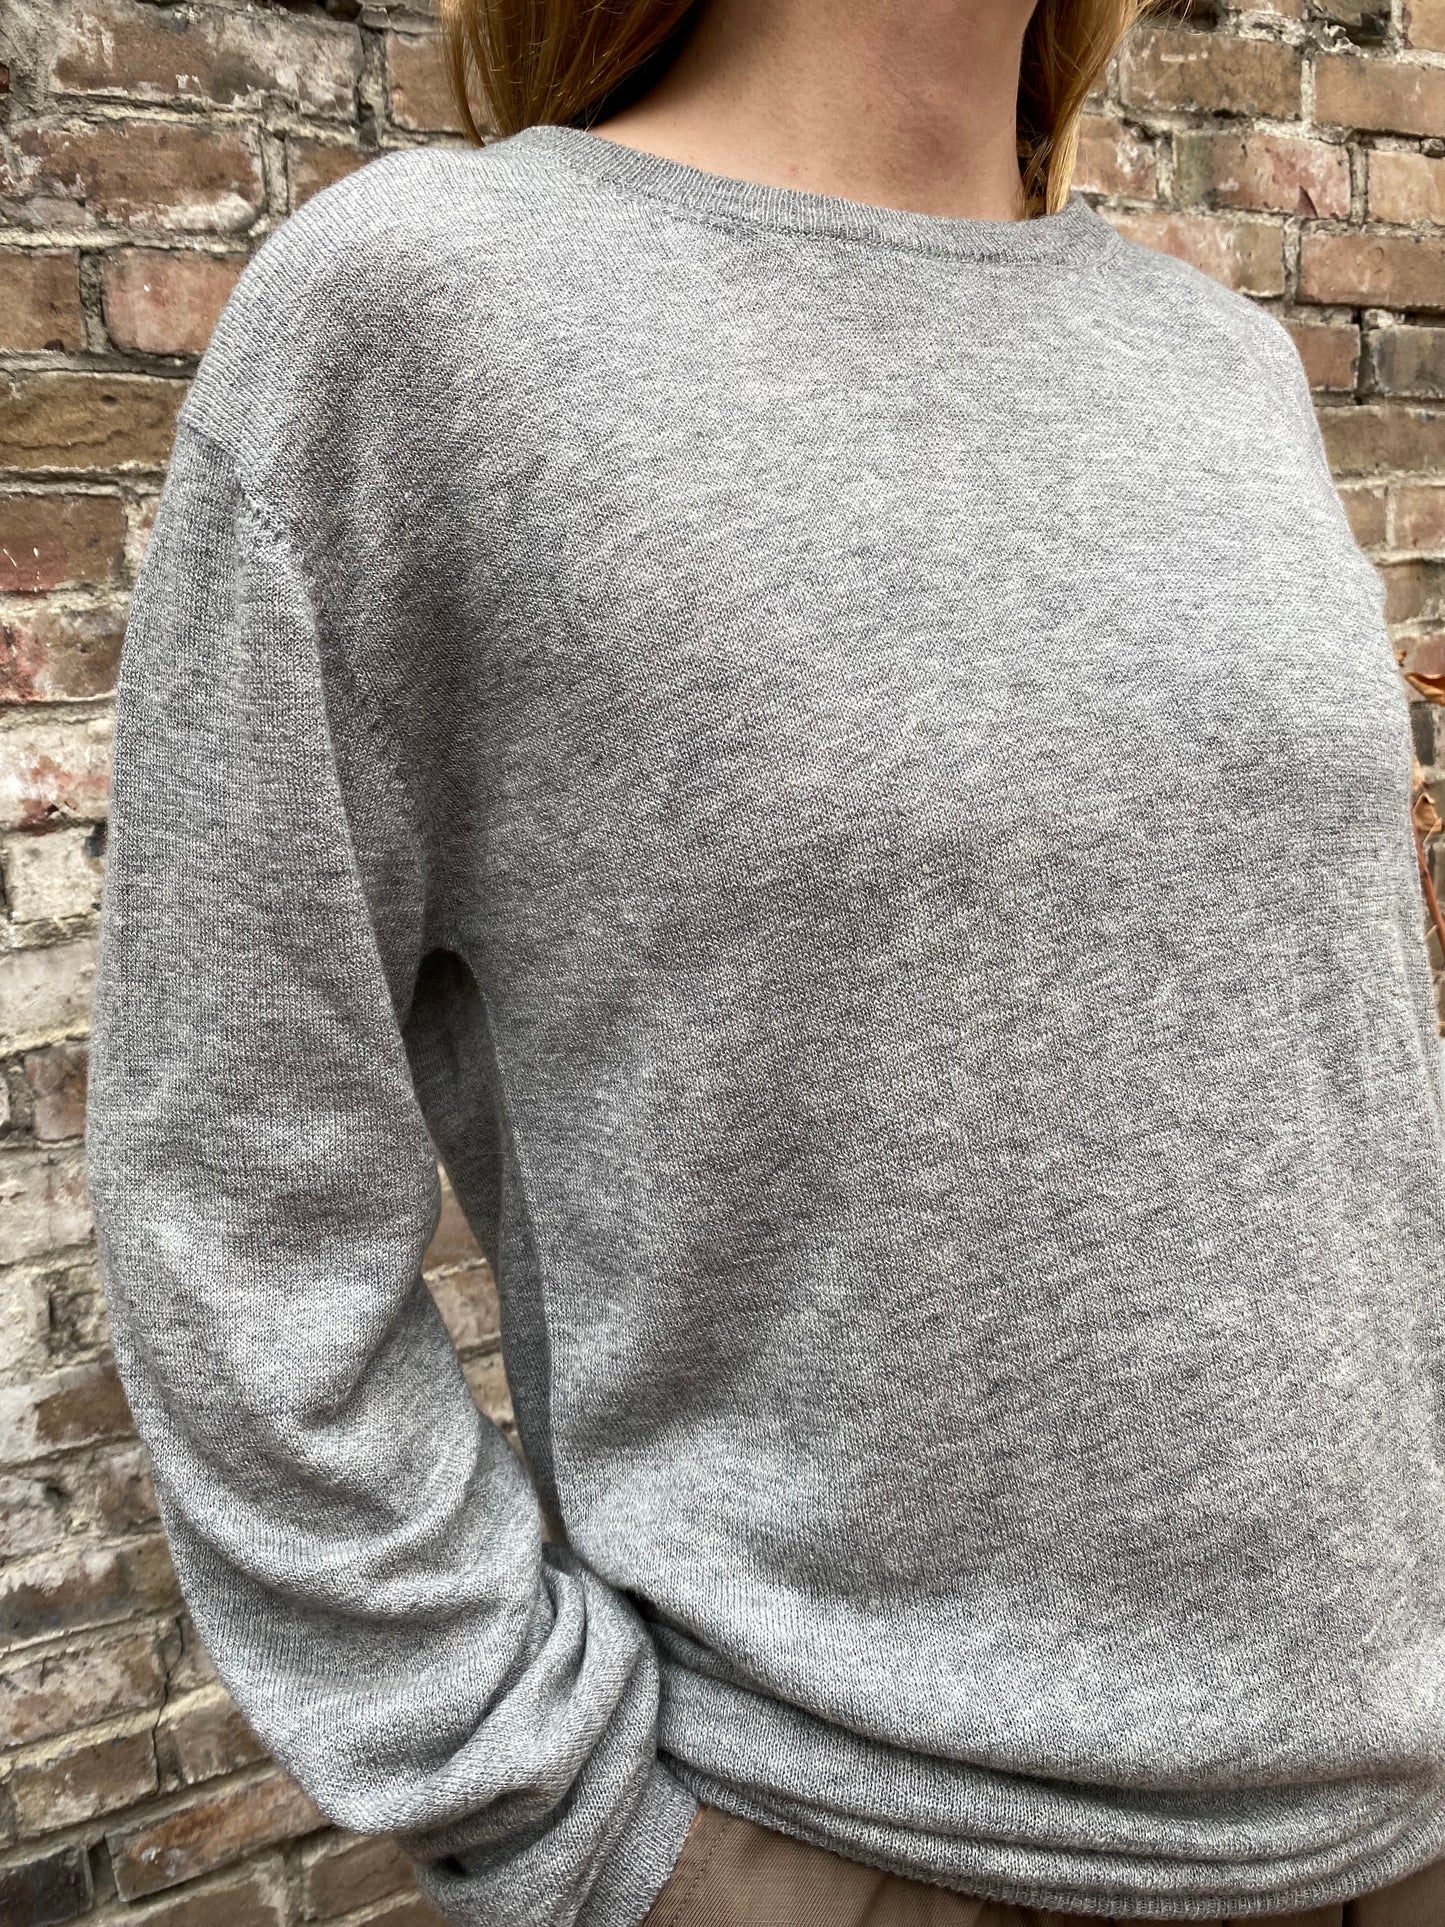 Dinadi Merino Wool Unisex Sweater in Flint Grey made in Nepal 